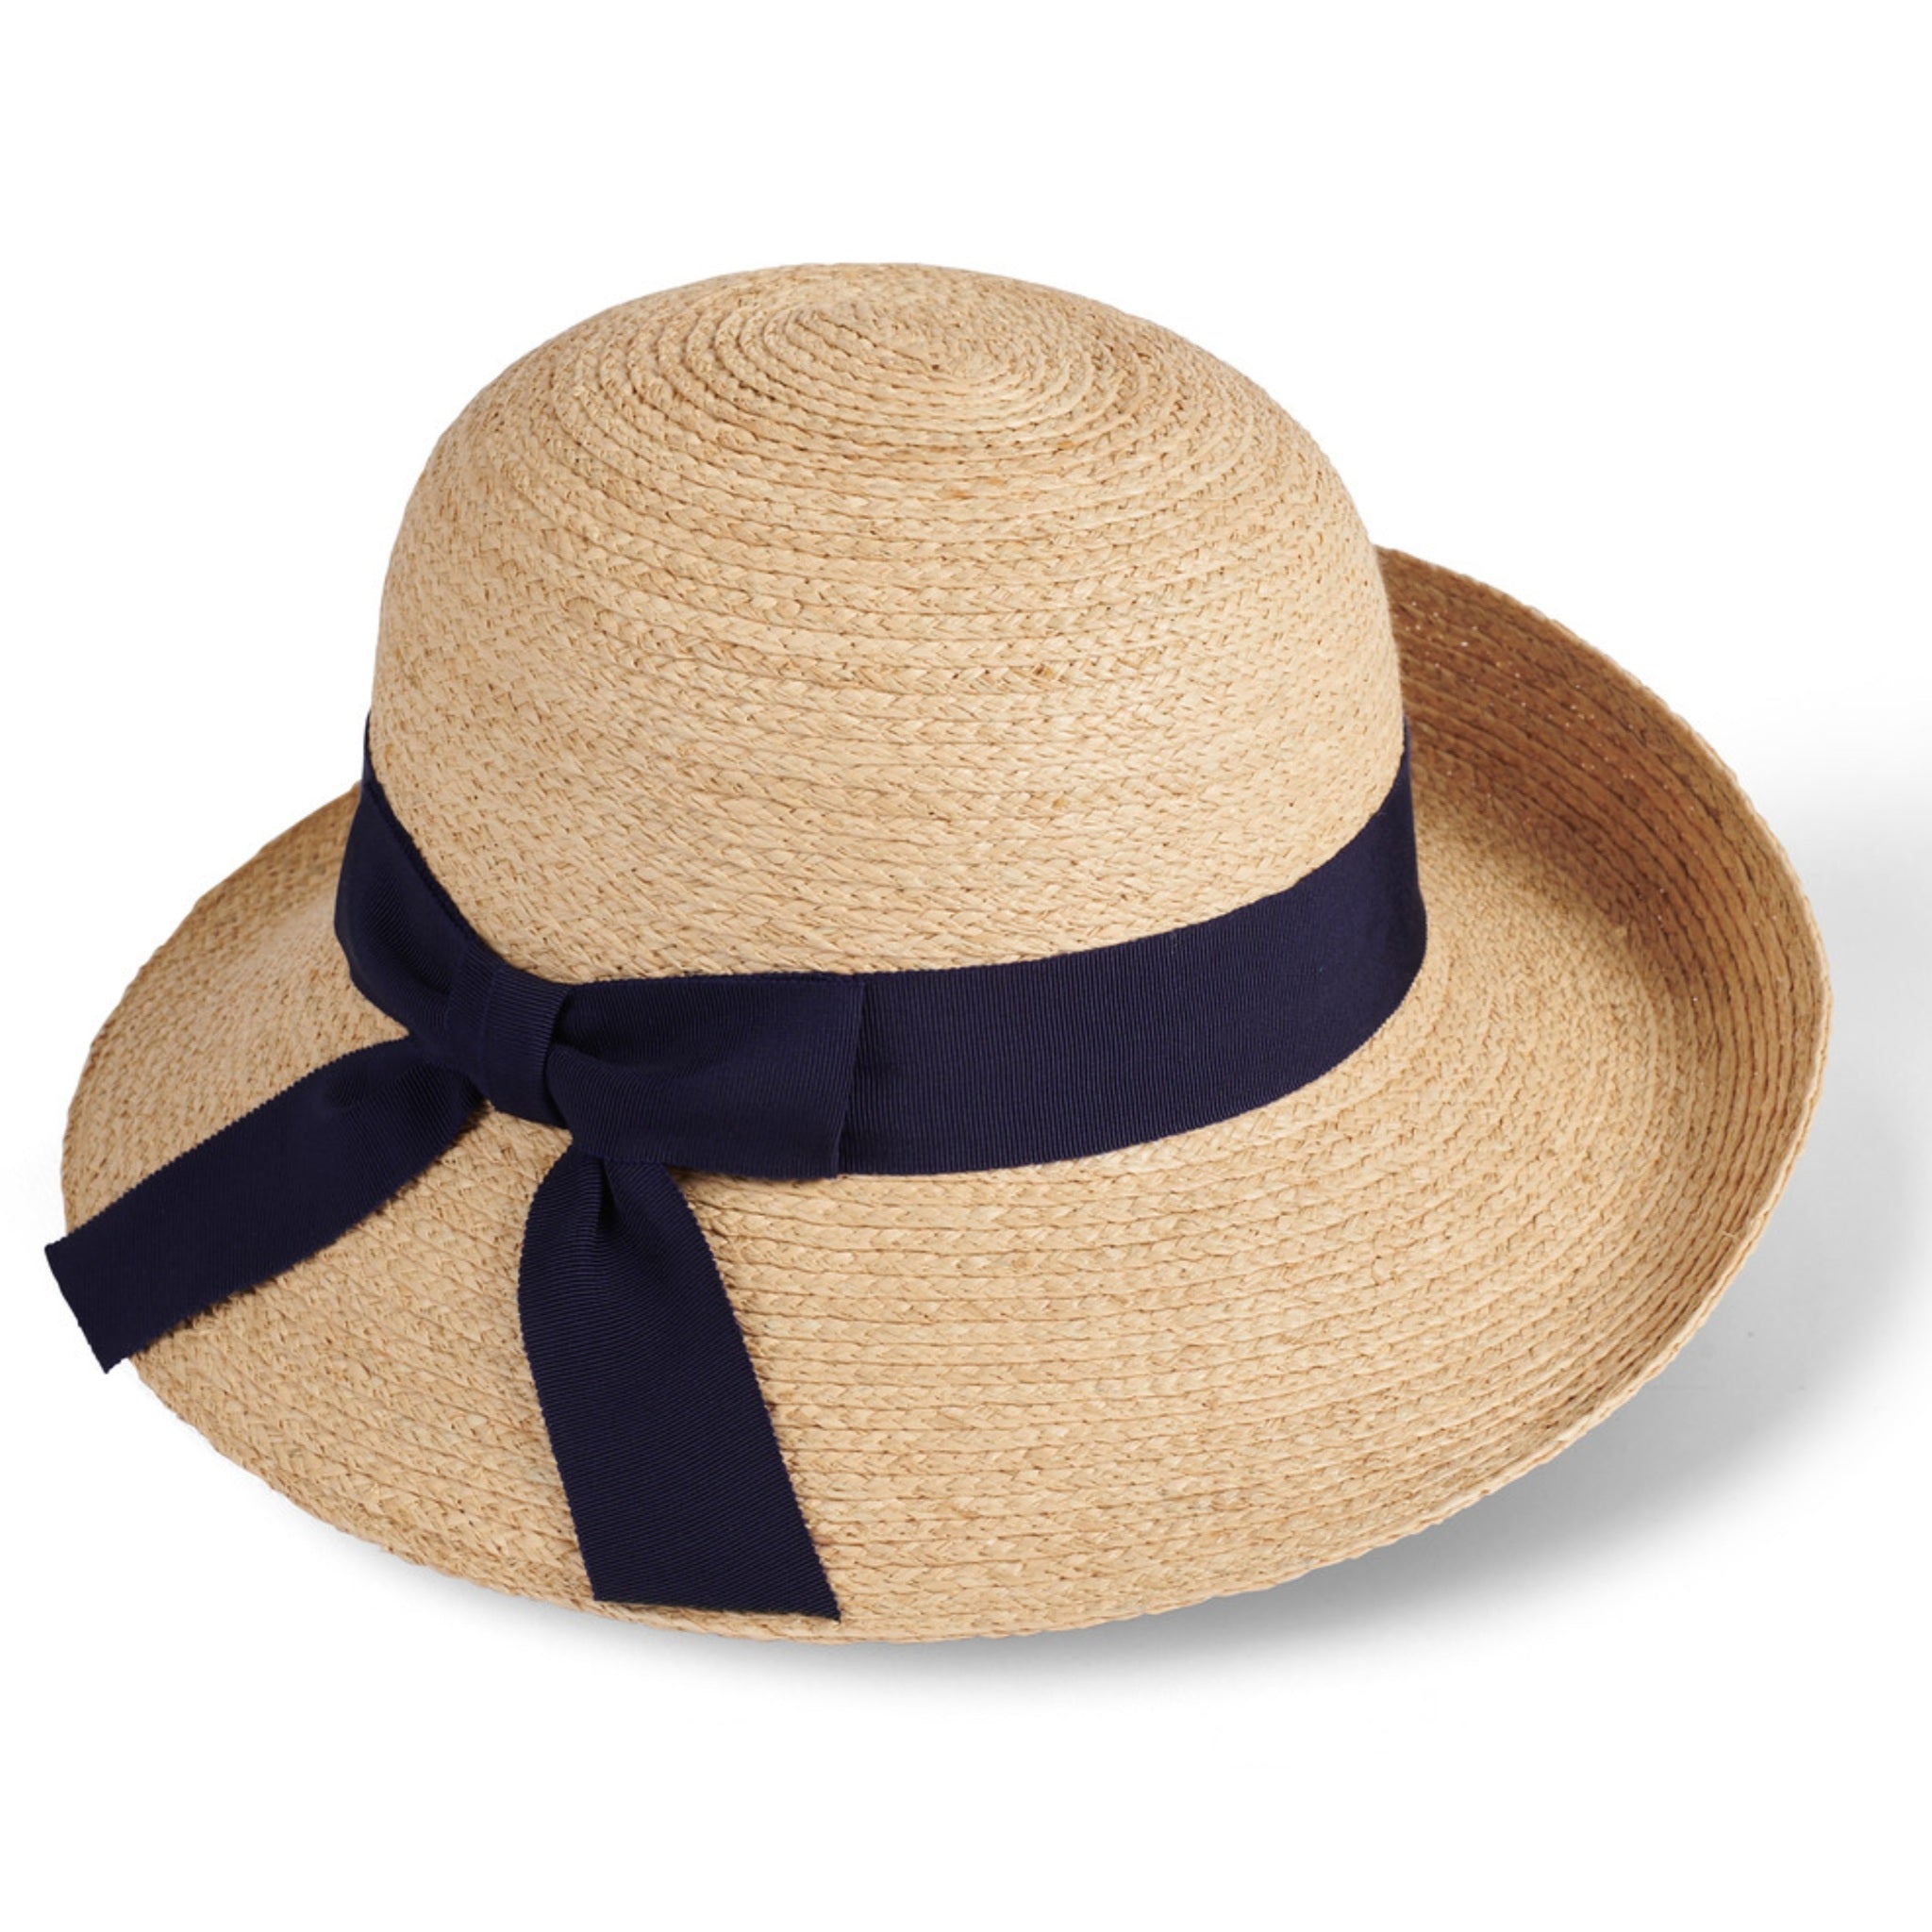 The Hat Shop Ladies Failsworth 'Bronte' Straw Sun Hat 